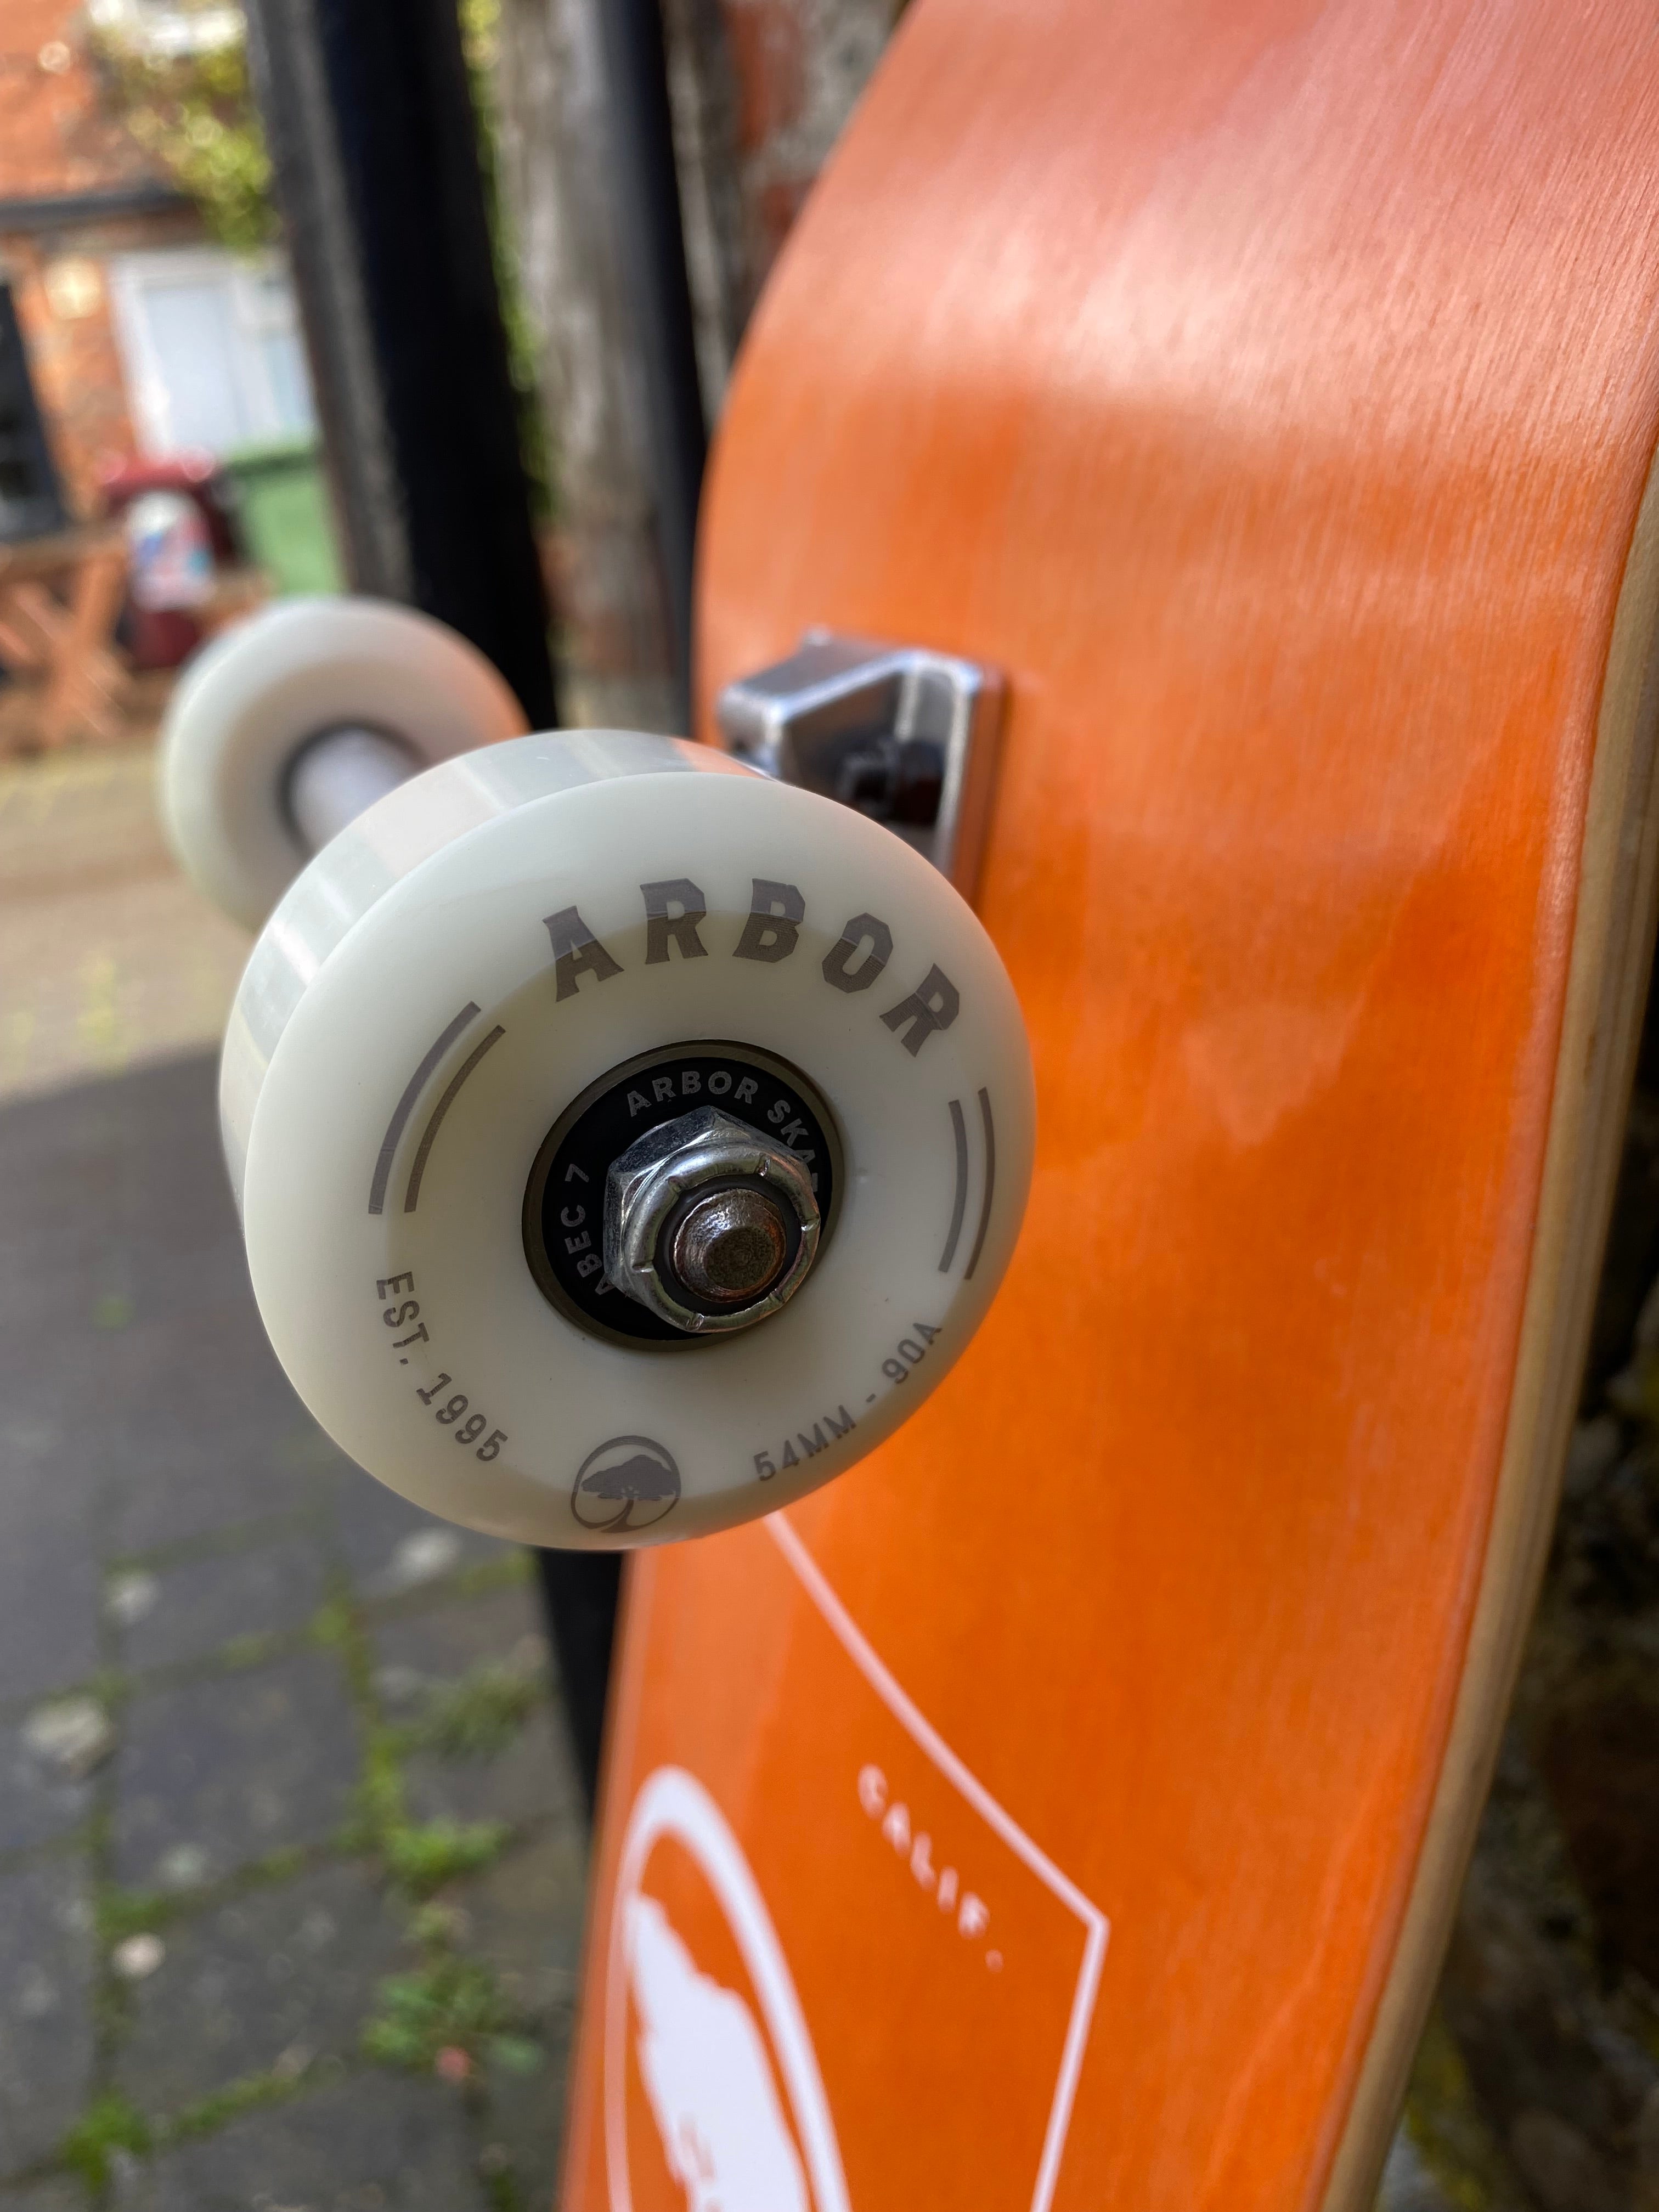 Arbor 8.25” Street Complete Skateboard